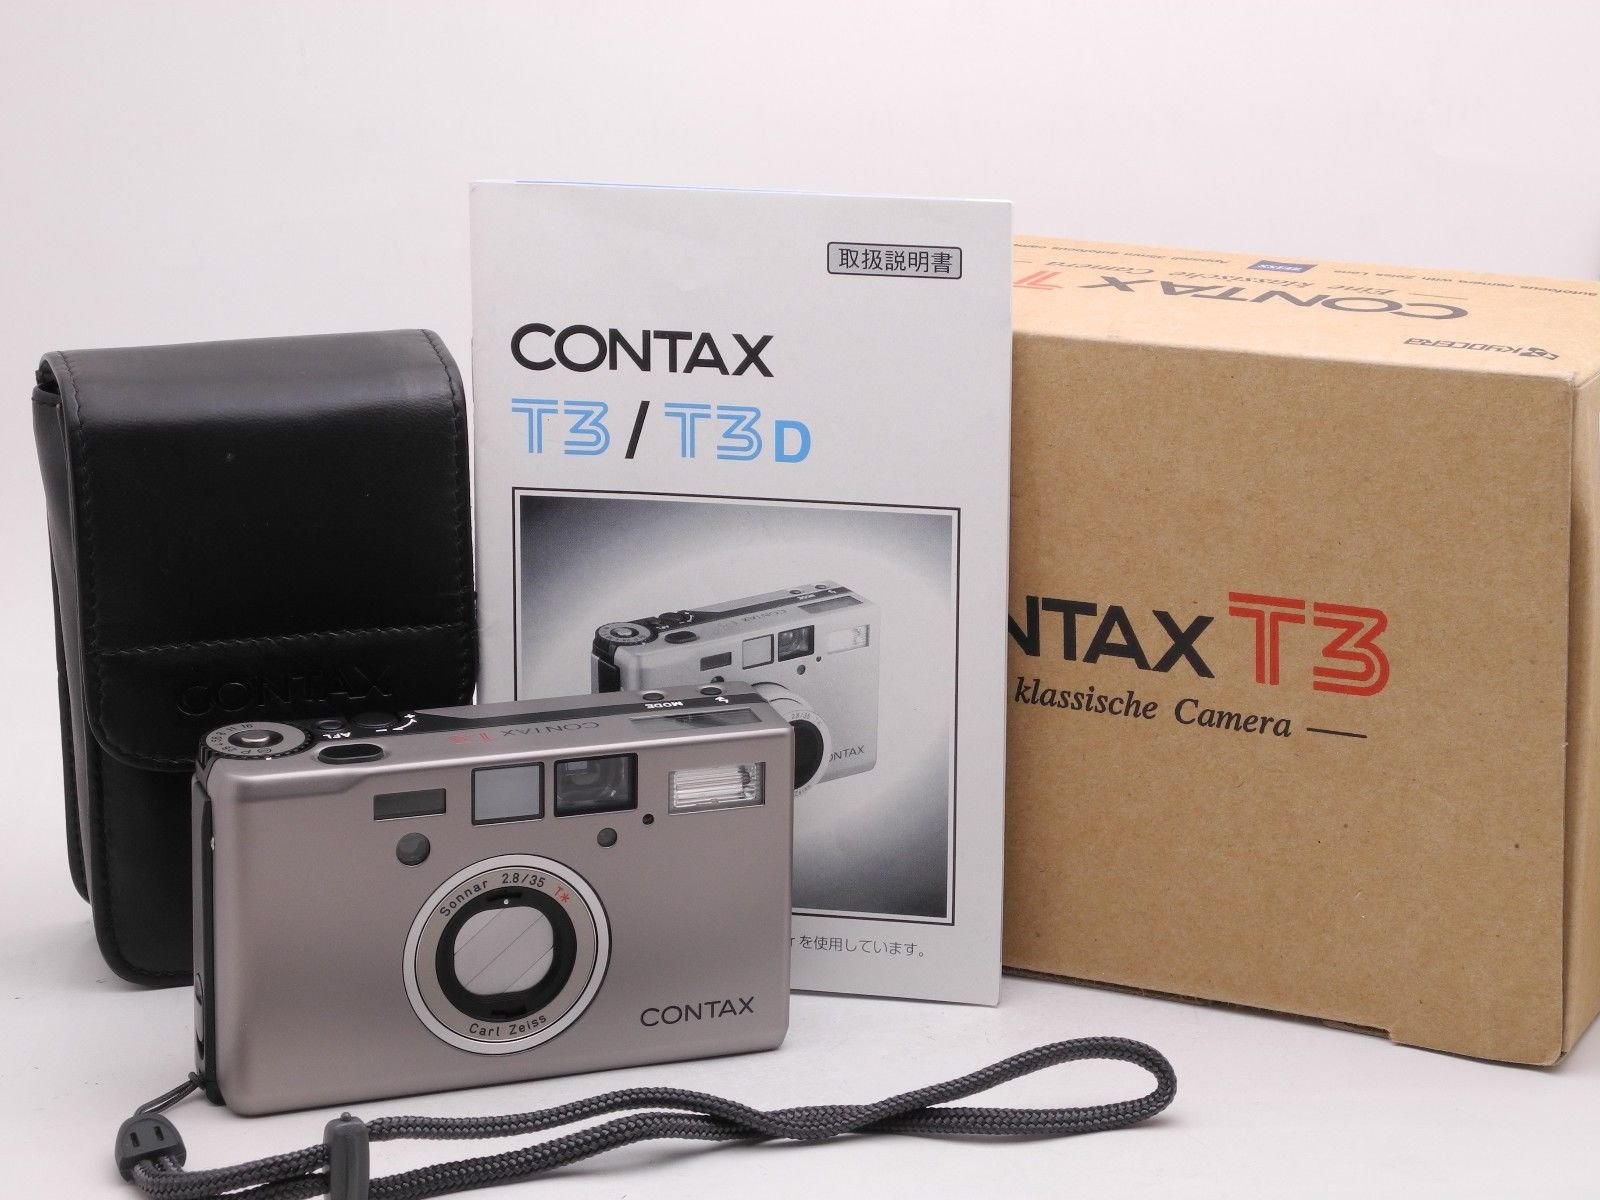 CONTAX T3 35MM COMPACT CAMERA - Black -